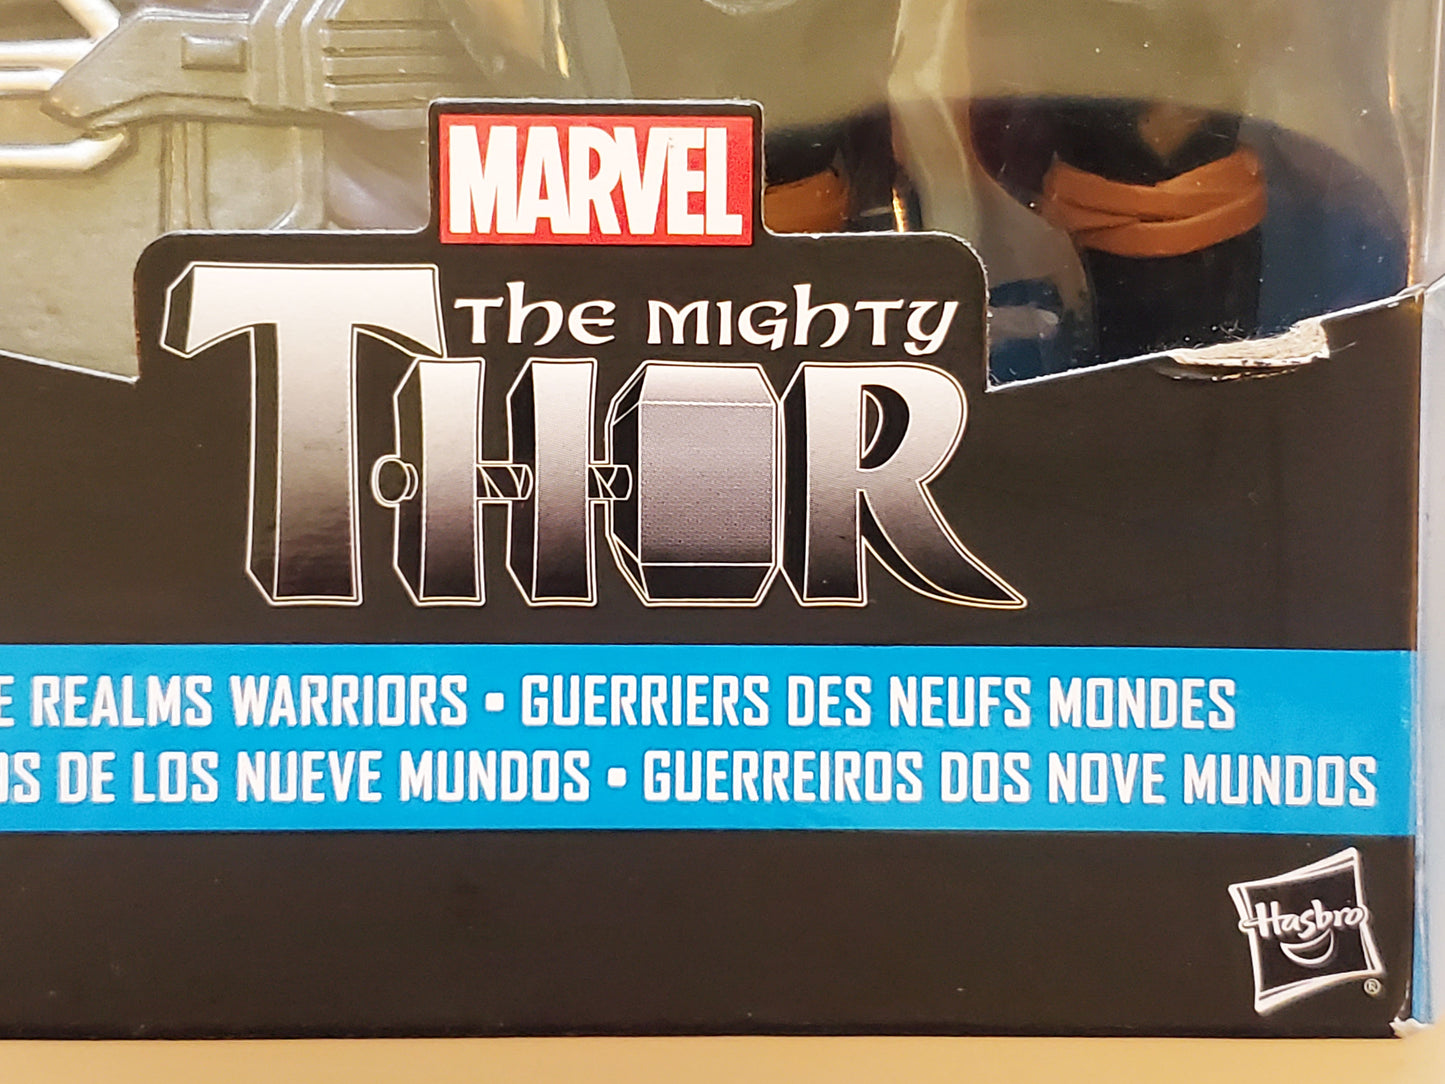 Marvel Legends Hulk Series Nine Realms Warriors Thor (Odinson) 6-Inch Action Figure